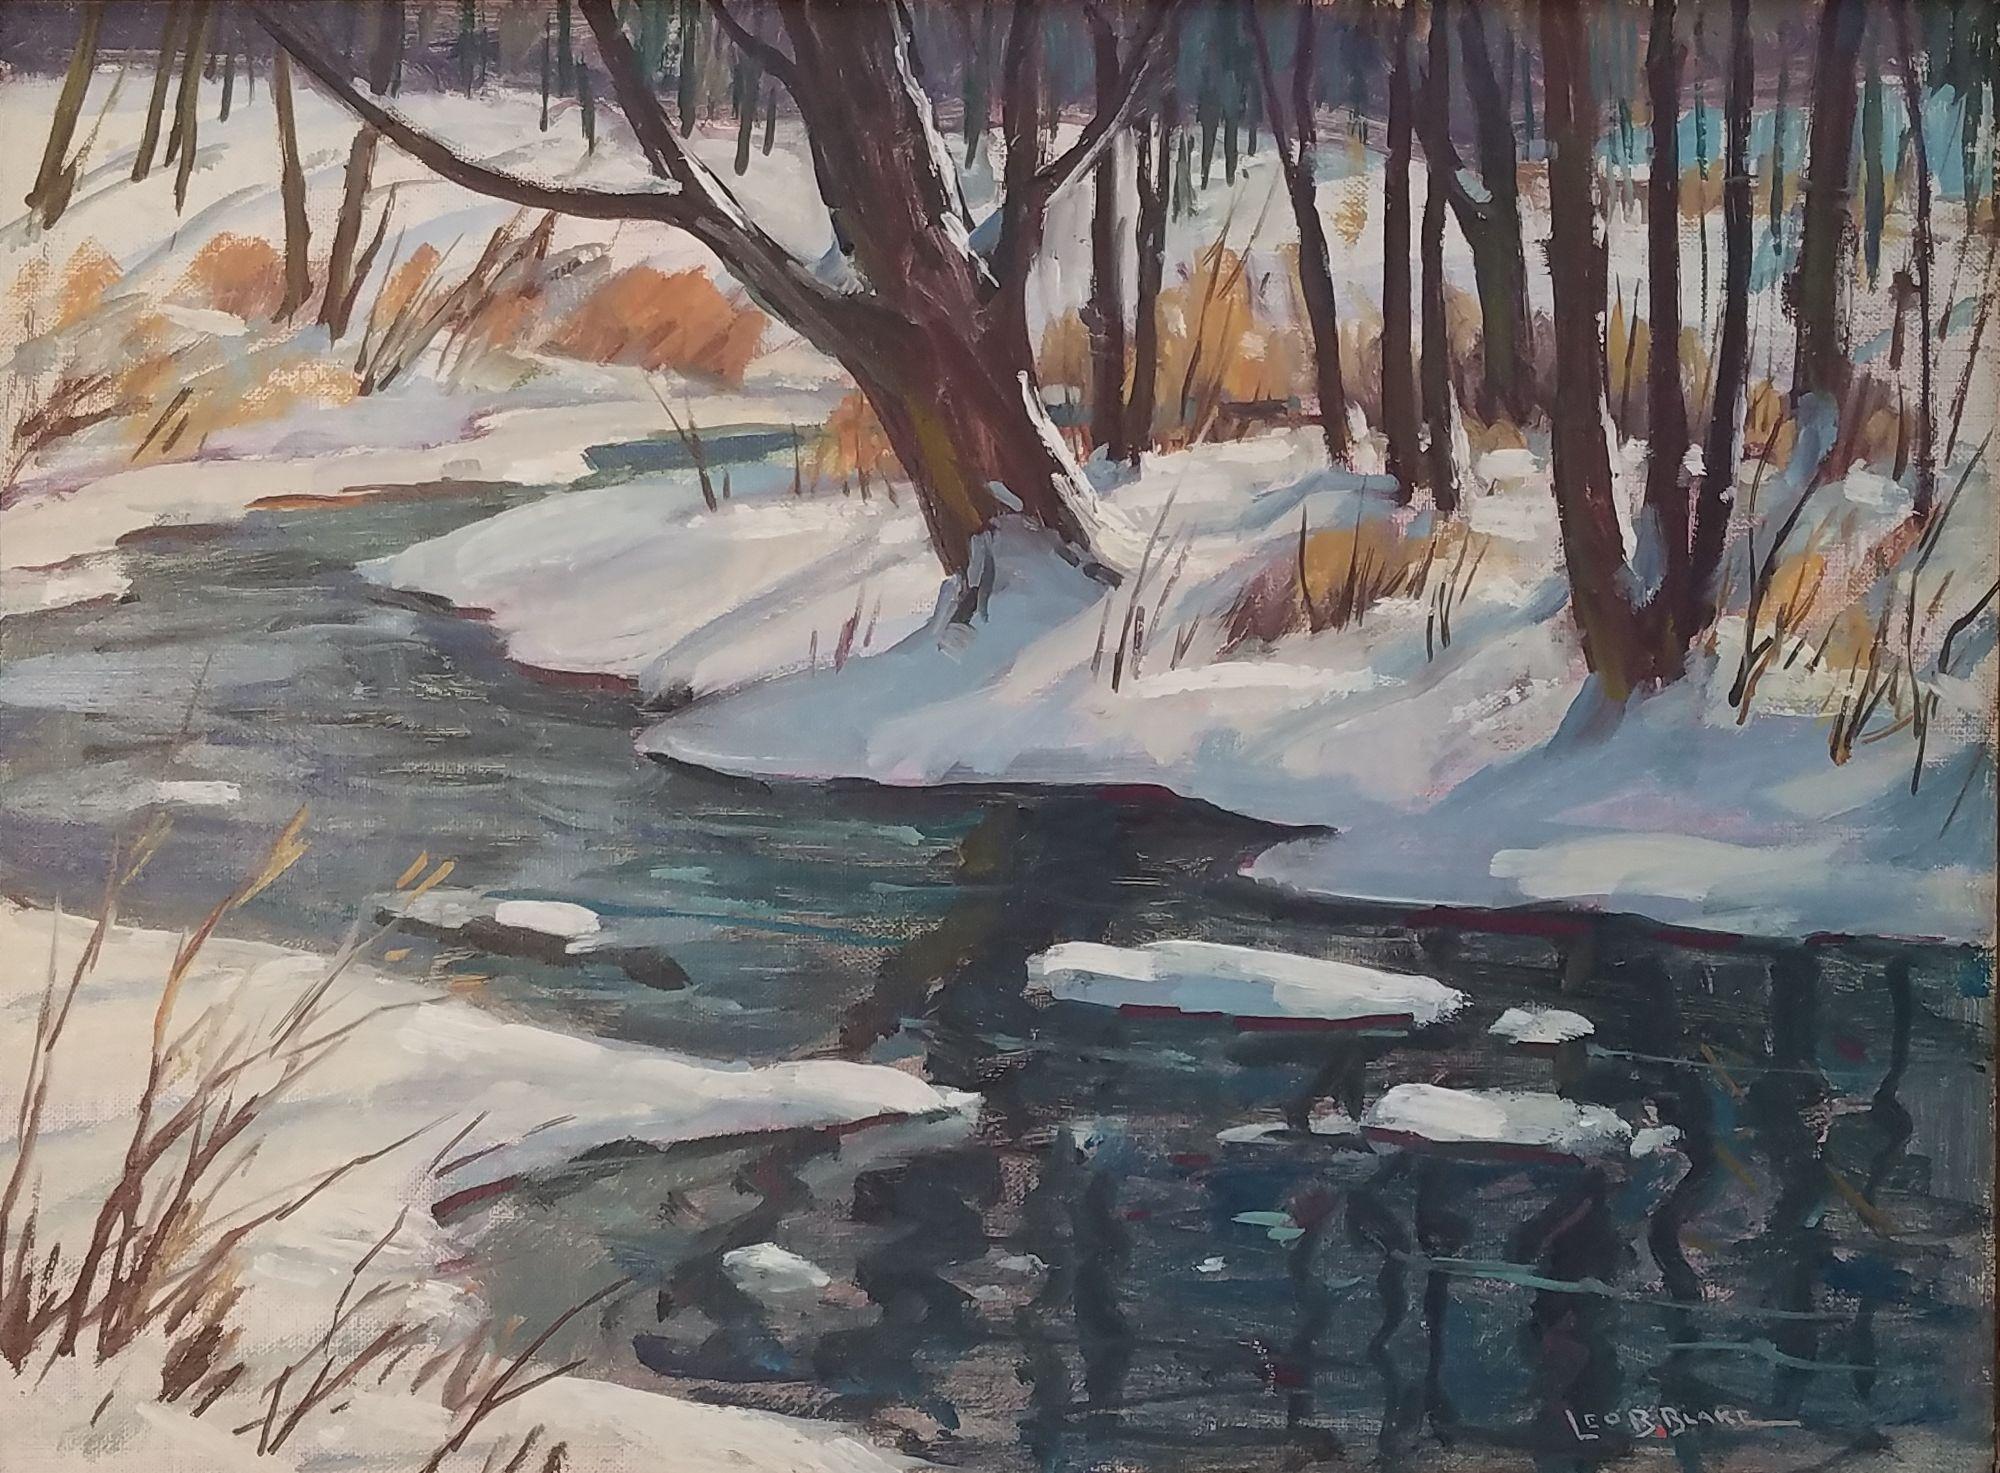 ""Berkshires Winterlandschaft", Leo Blake, Snowy Stream in Massachusetts